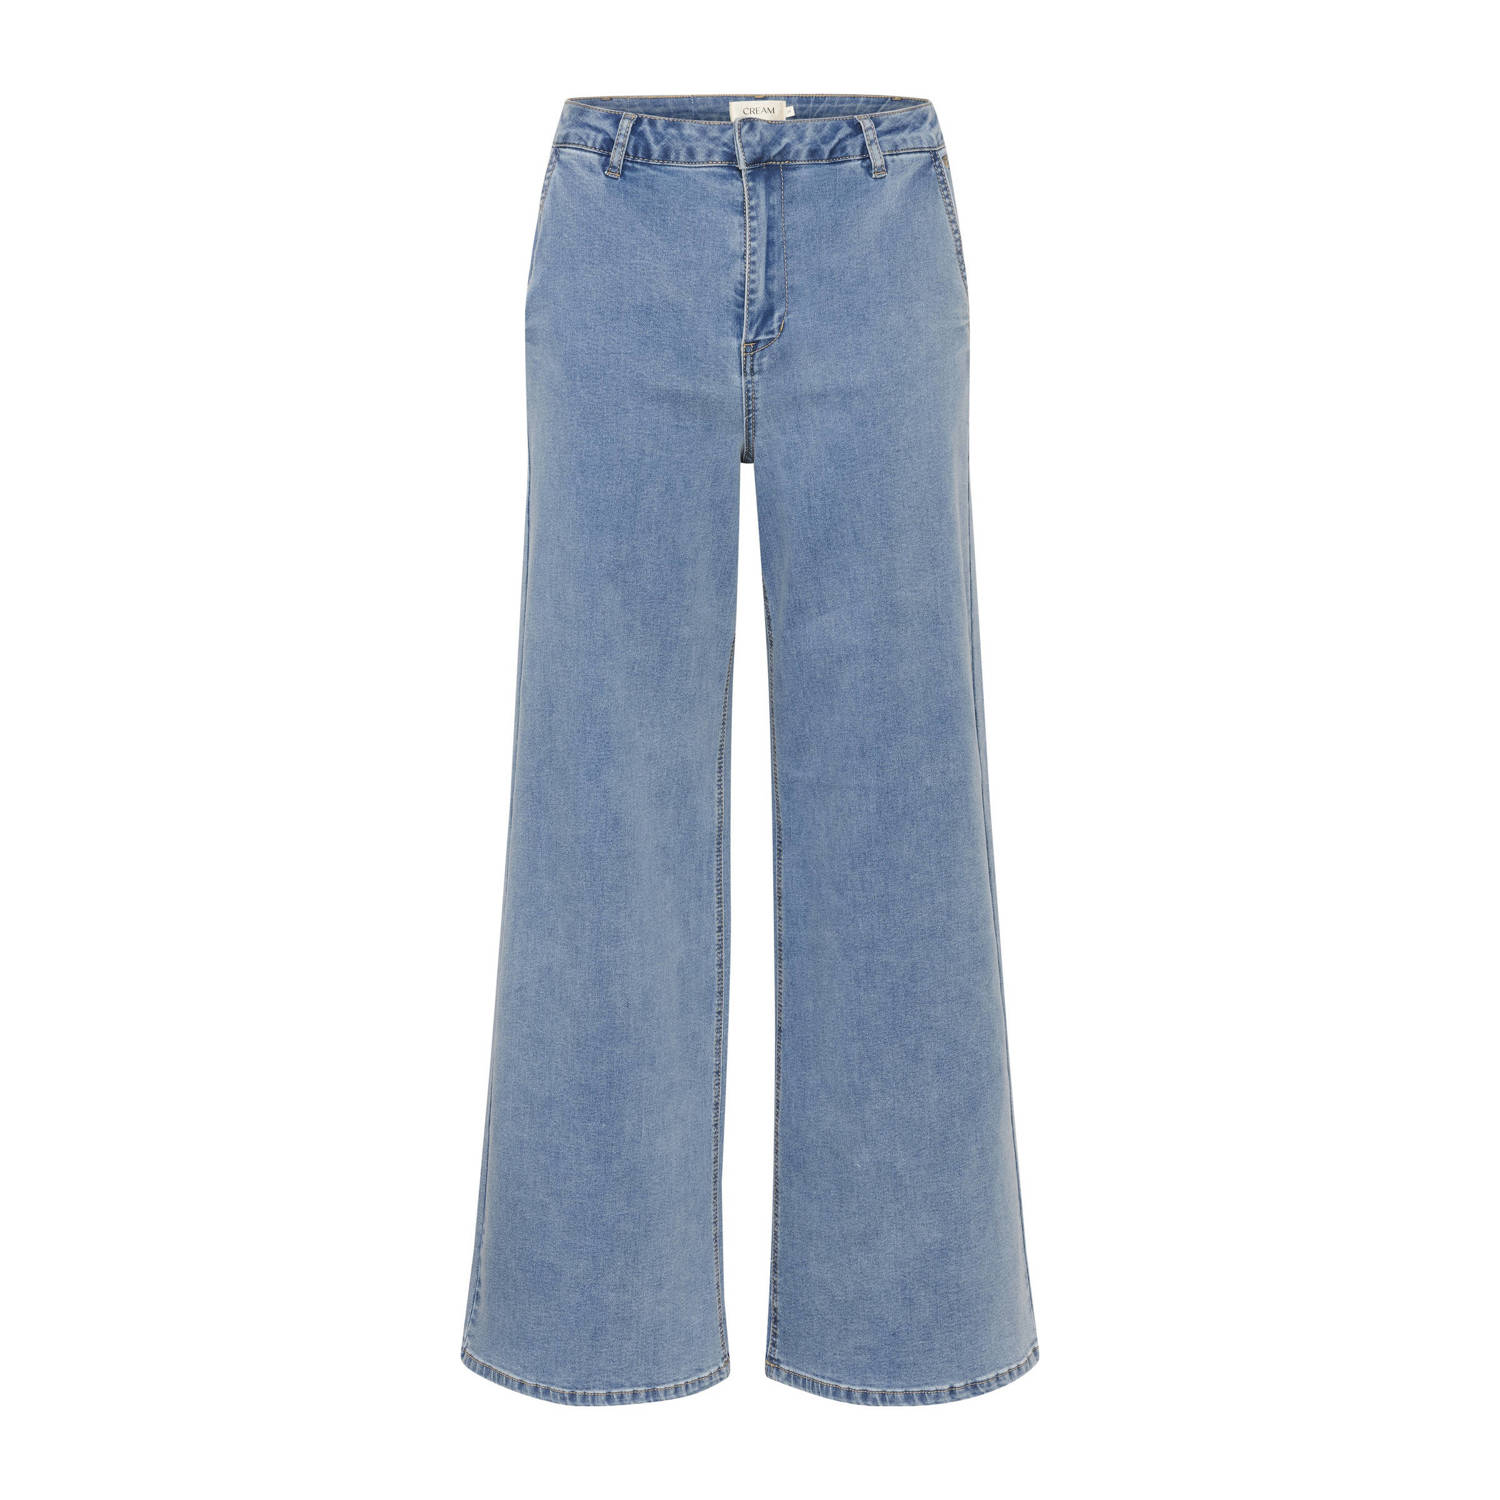 Cream flared jeans CRVisti light blue denim